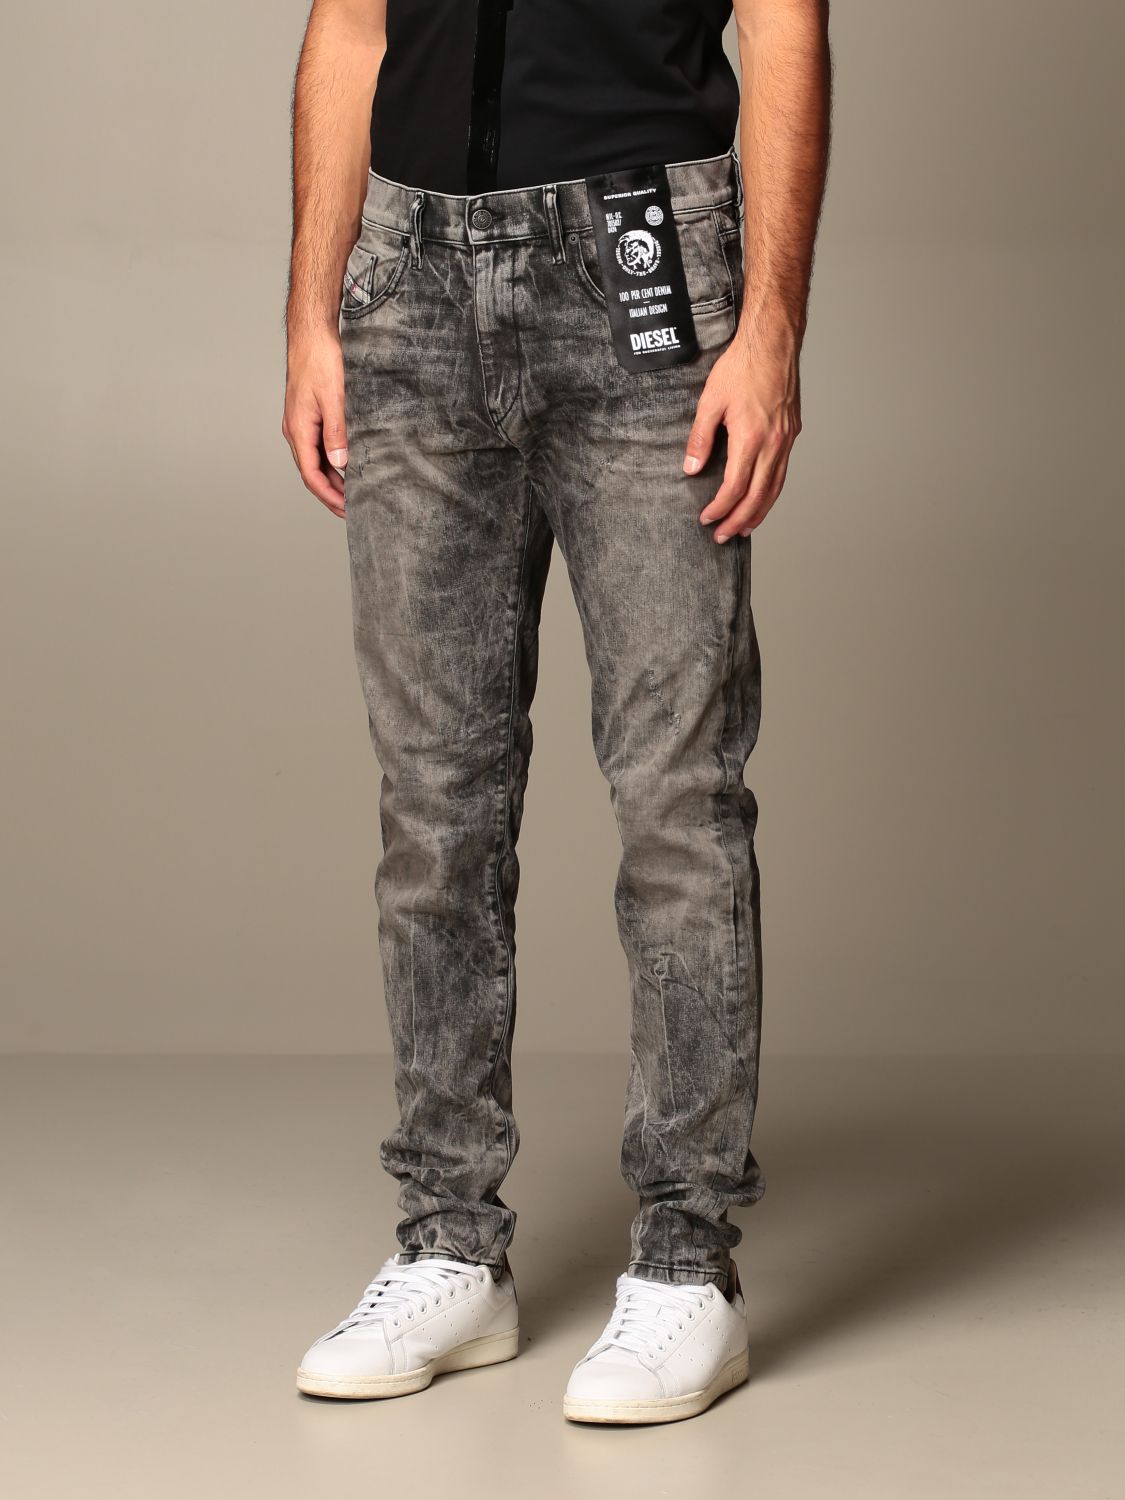 Diesel Outlet: D-strukt jeans in slim used denim | Jeans Diesel Men ...